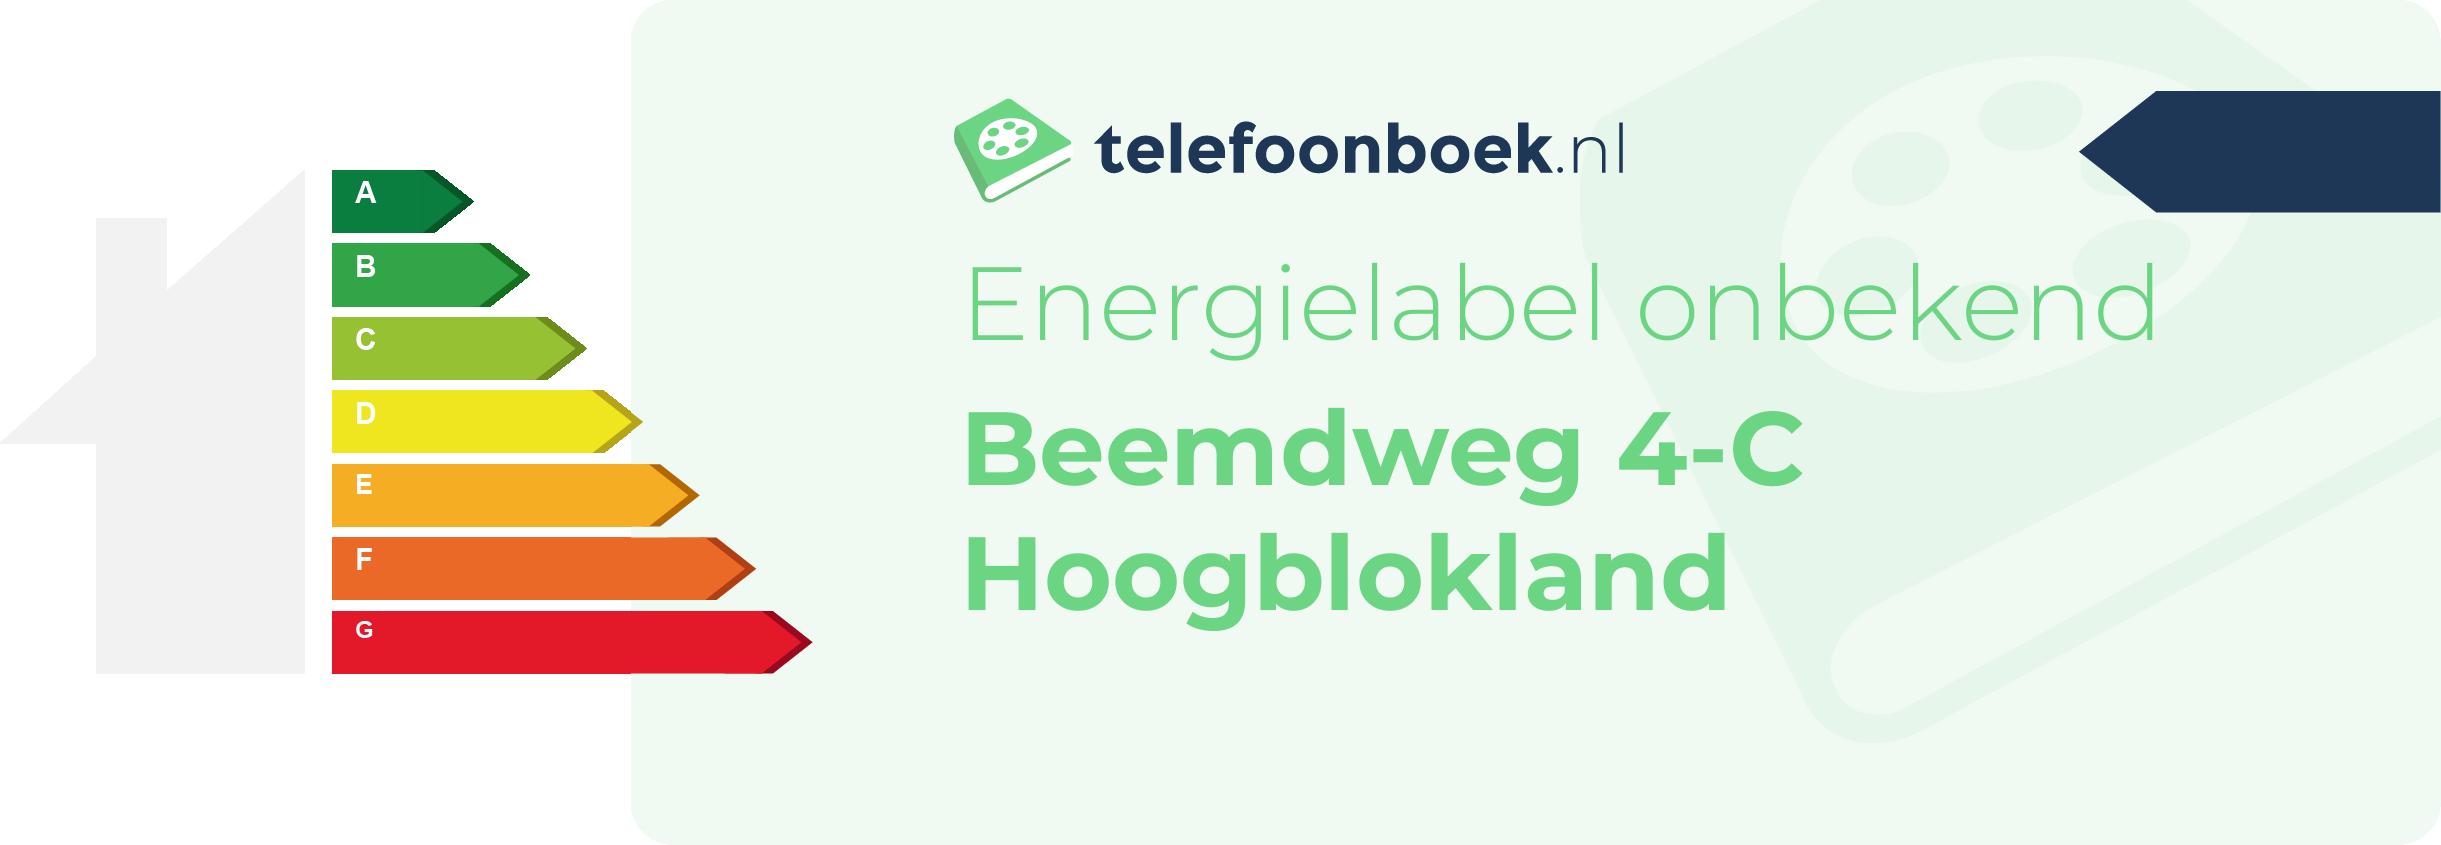 Energielabel Beemdweg 4-C Hoogblokland